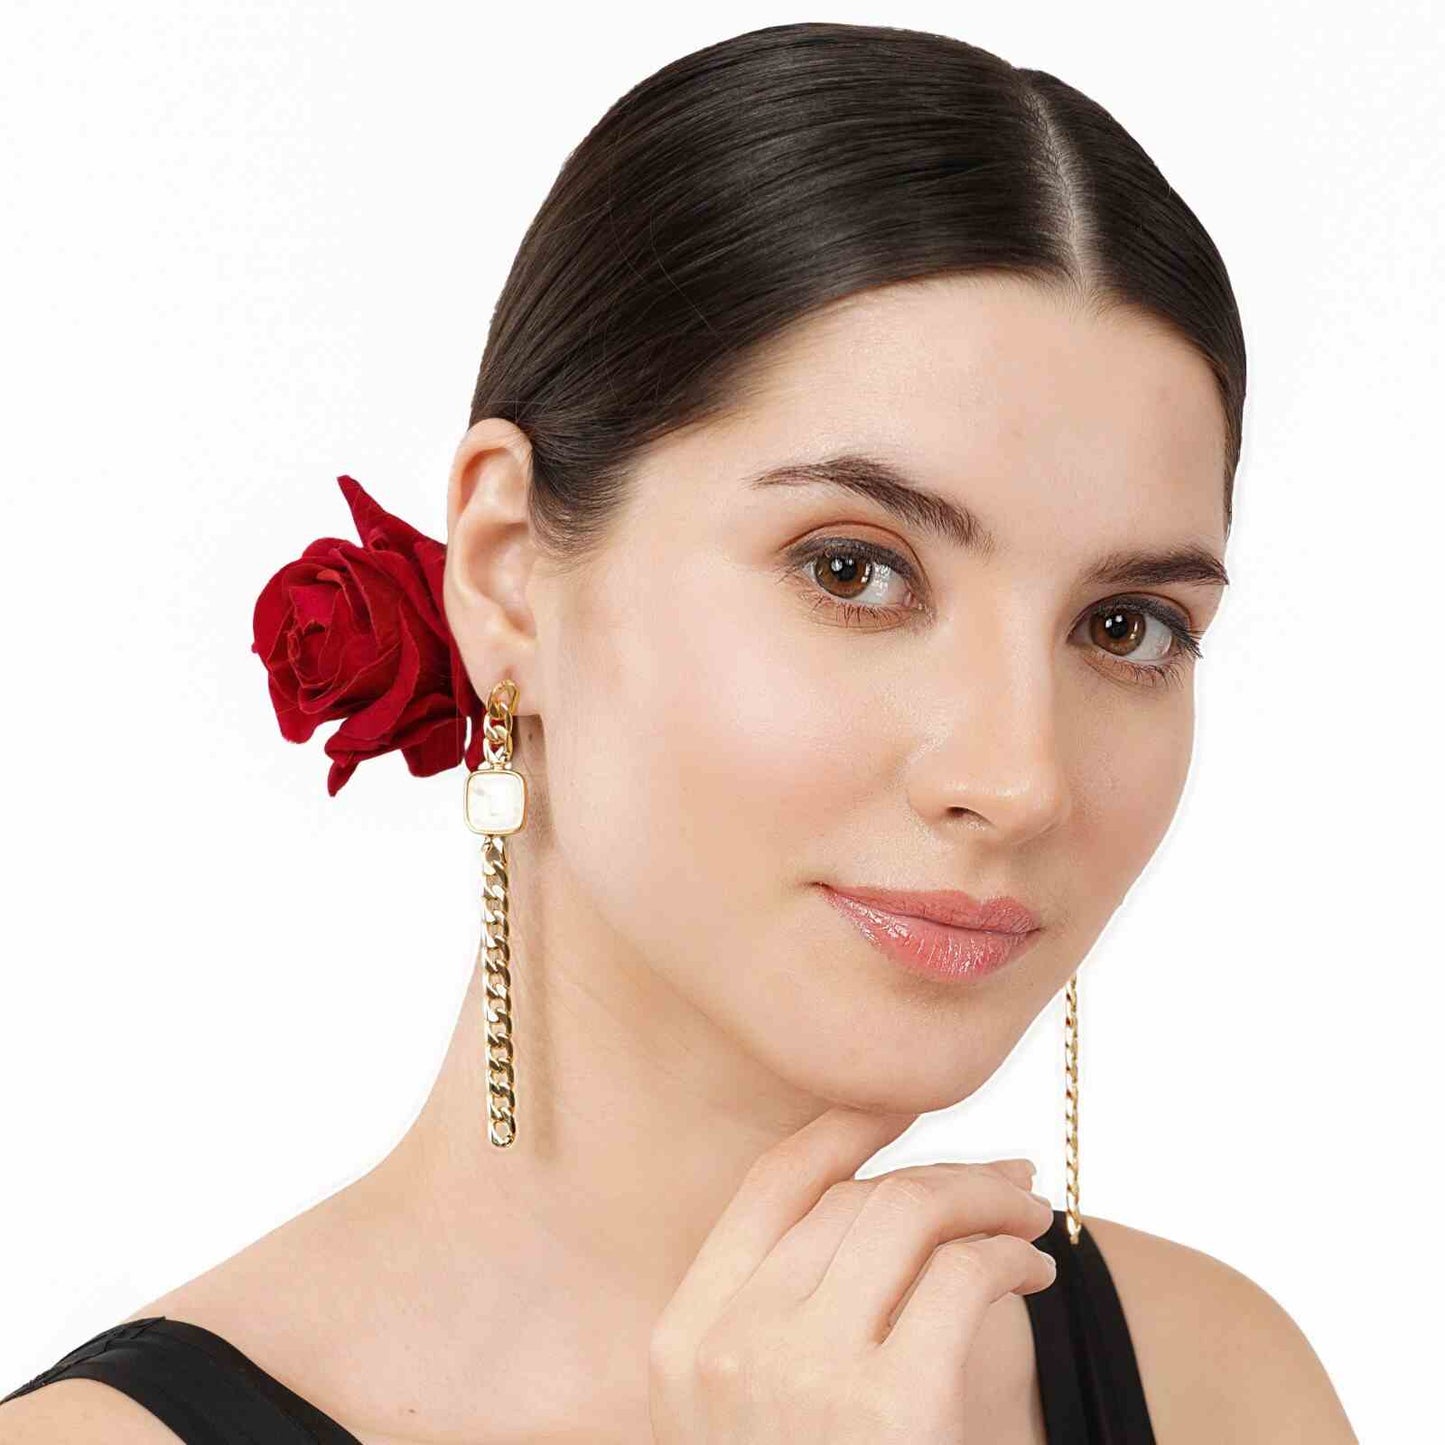 Gold Long Earrings Latest Design | Modern Jewellery For Women